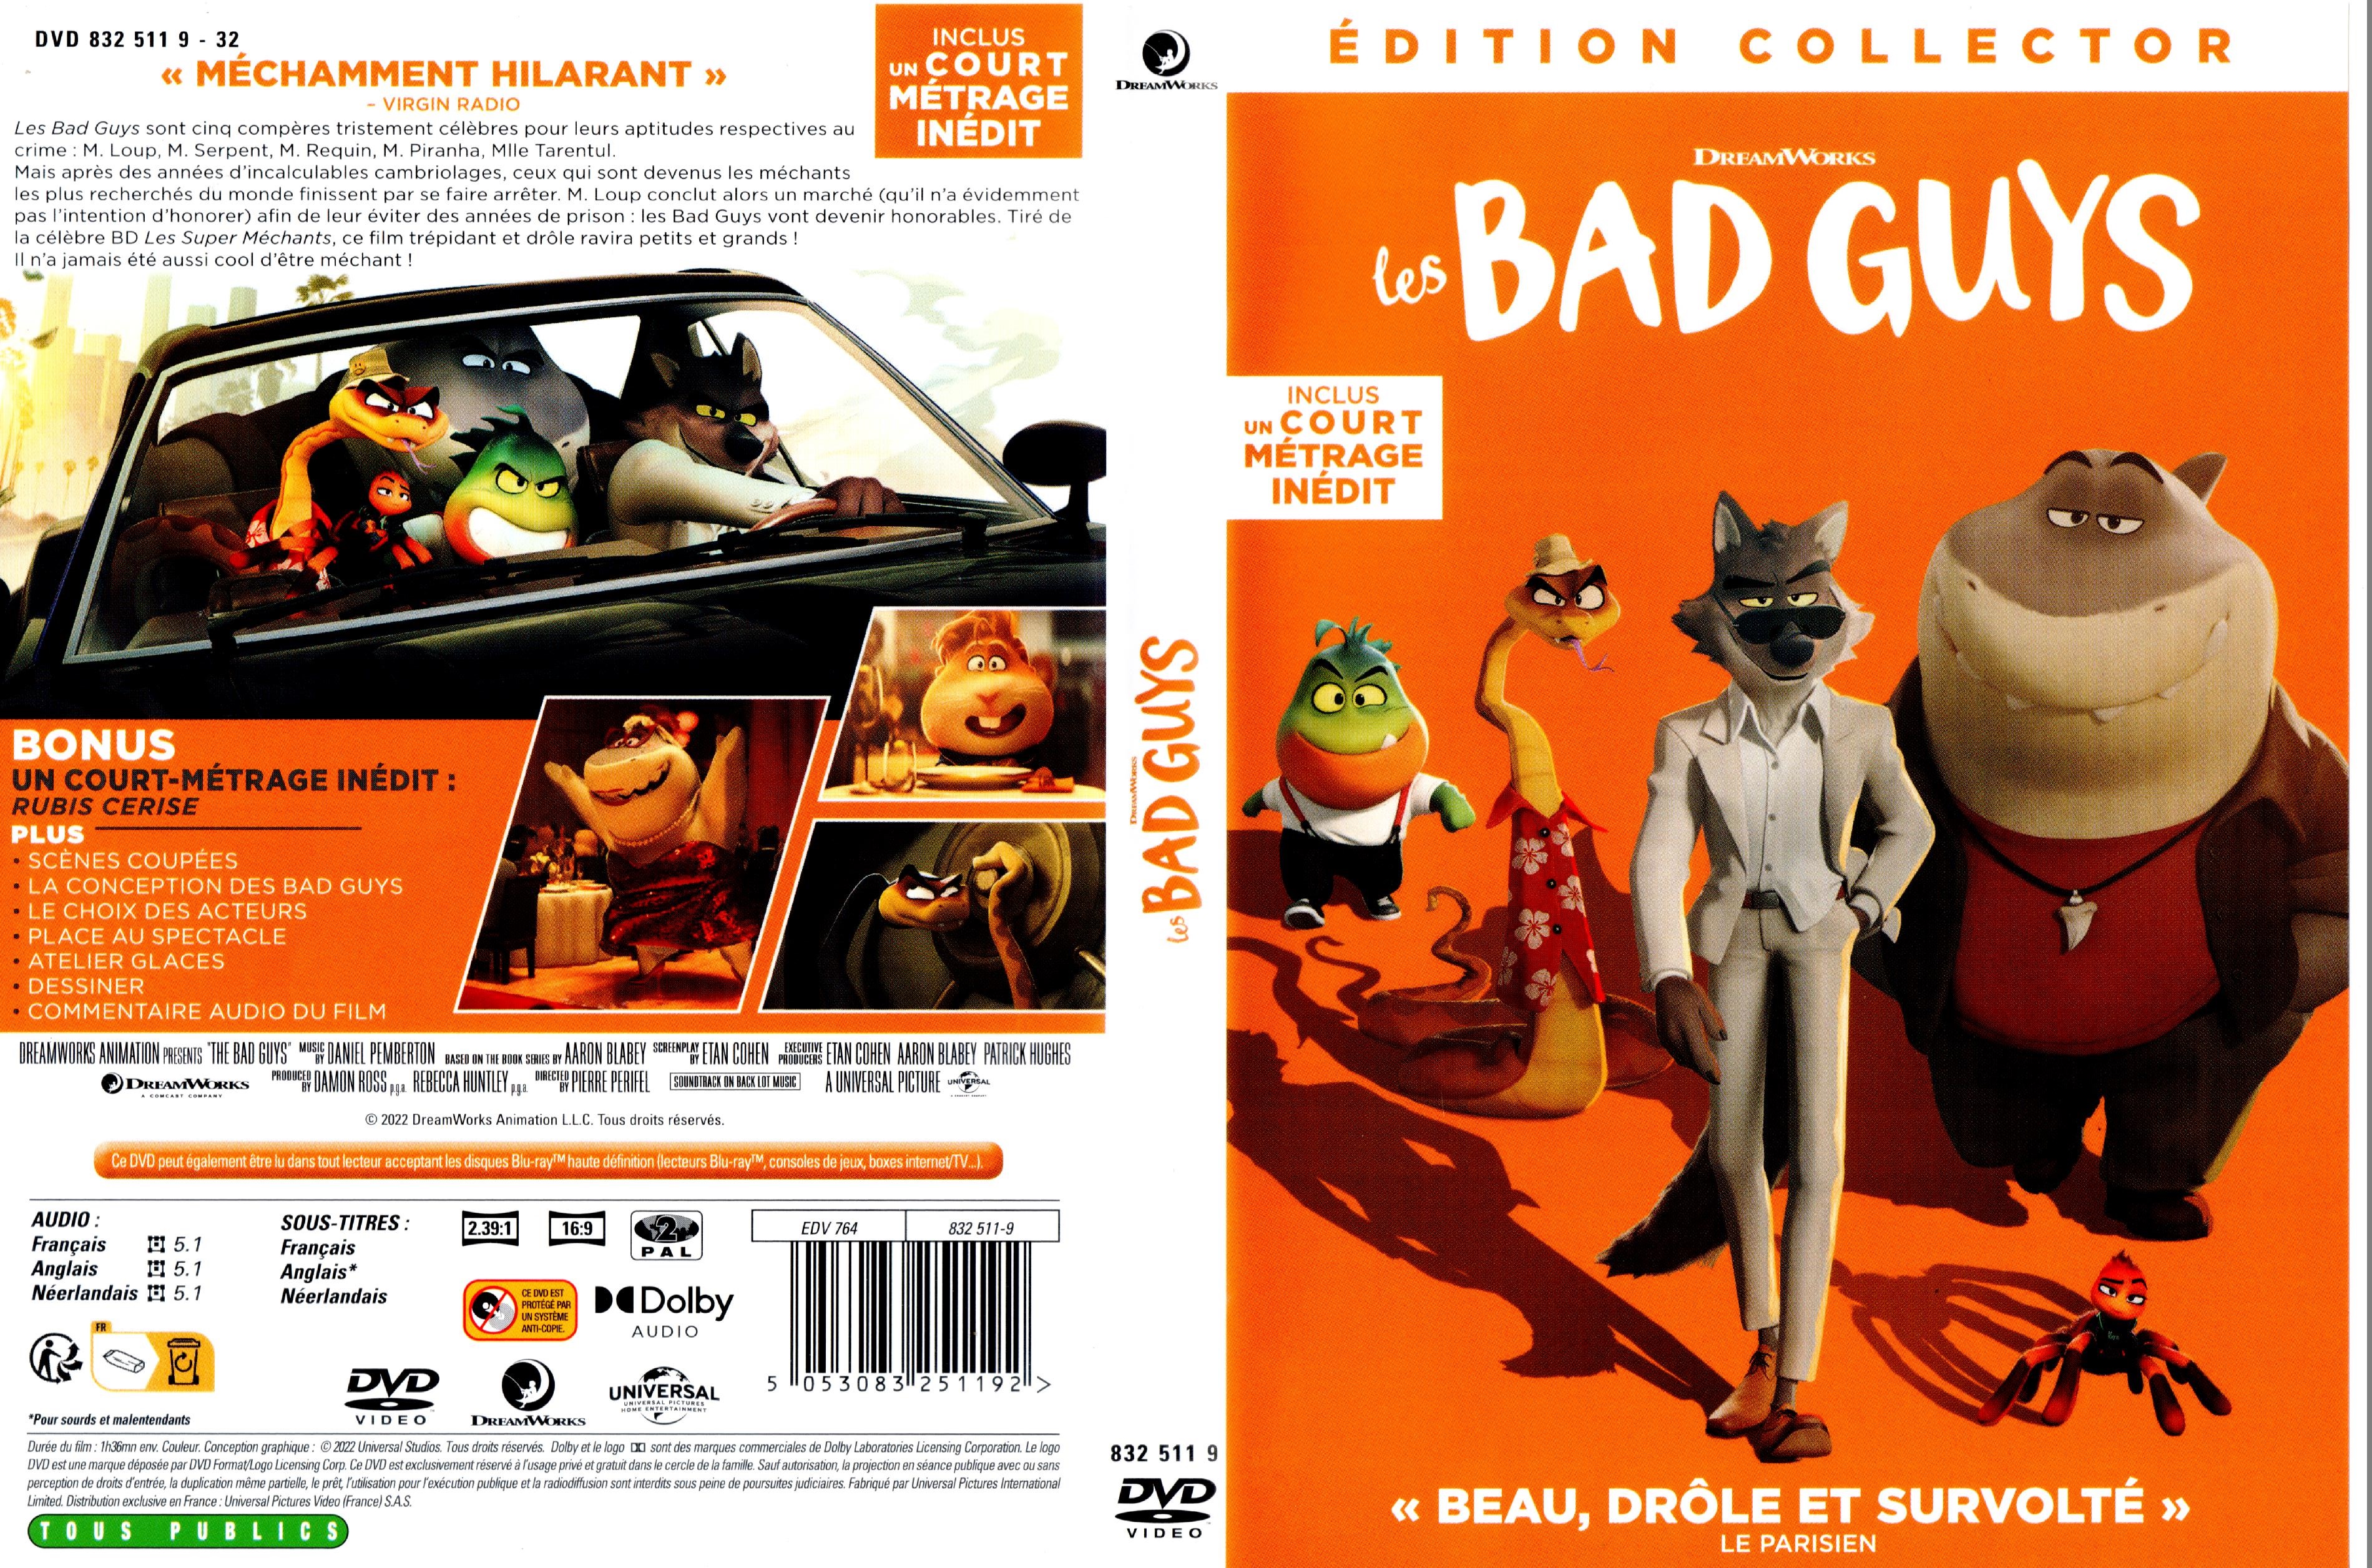 Jaquette DVD Les bad guys